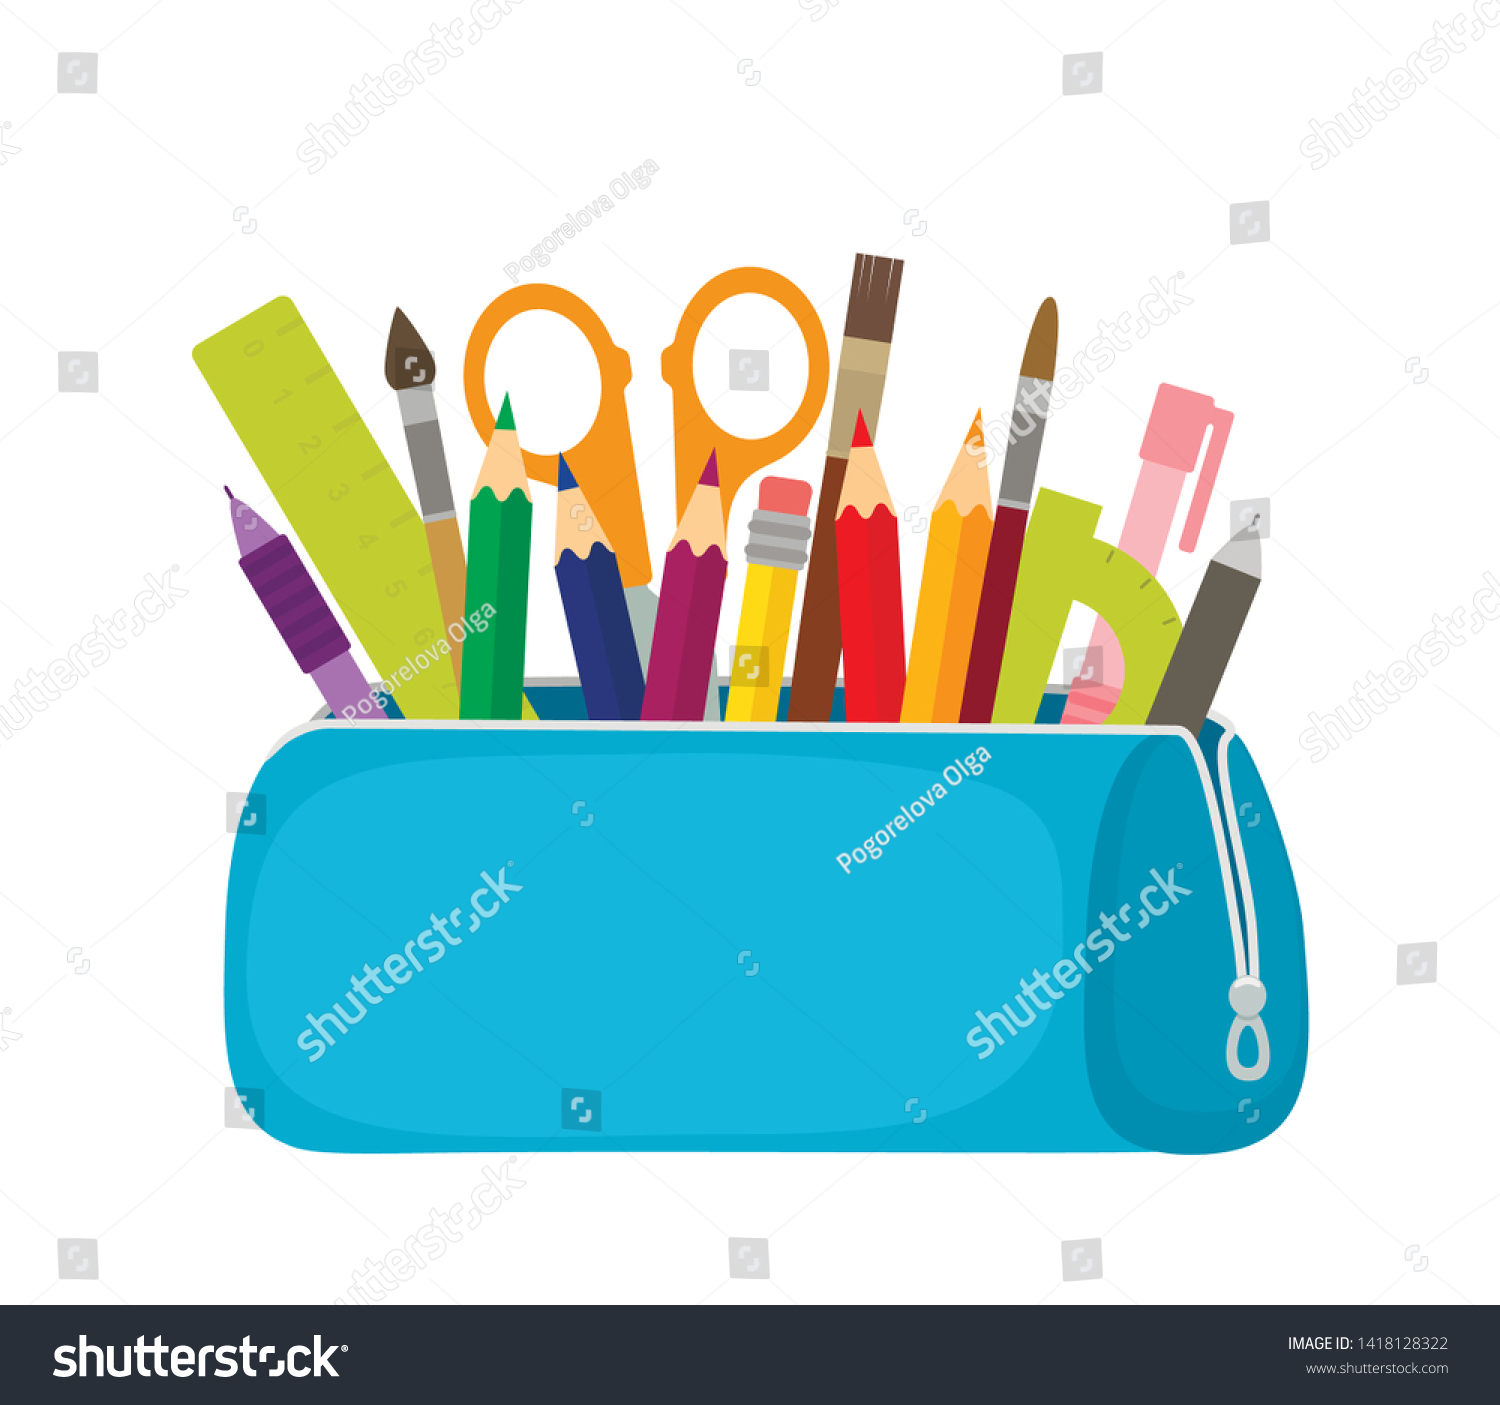 pen and pencil case